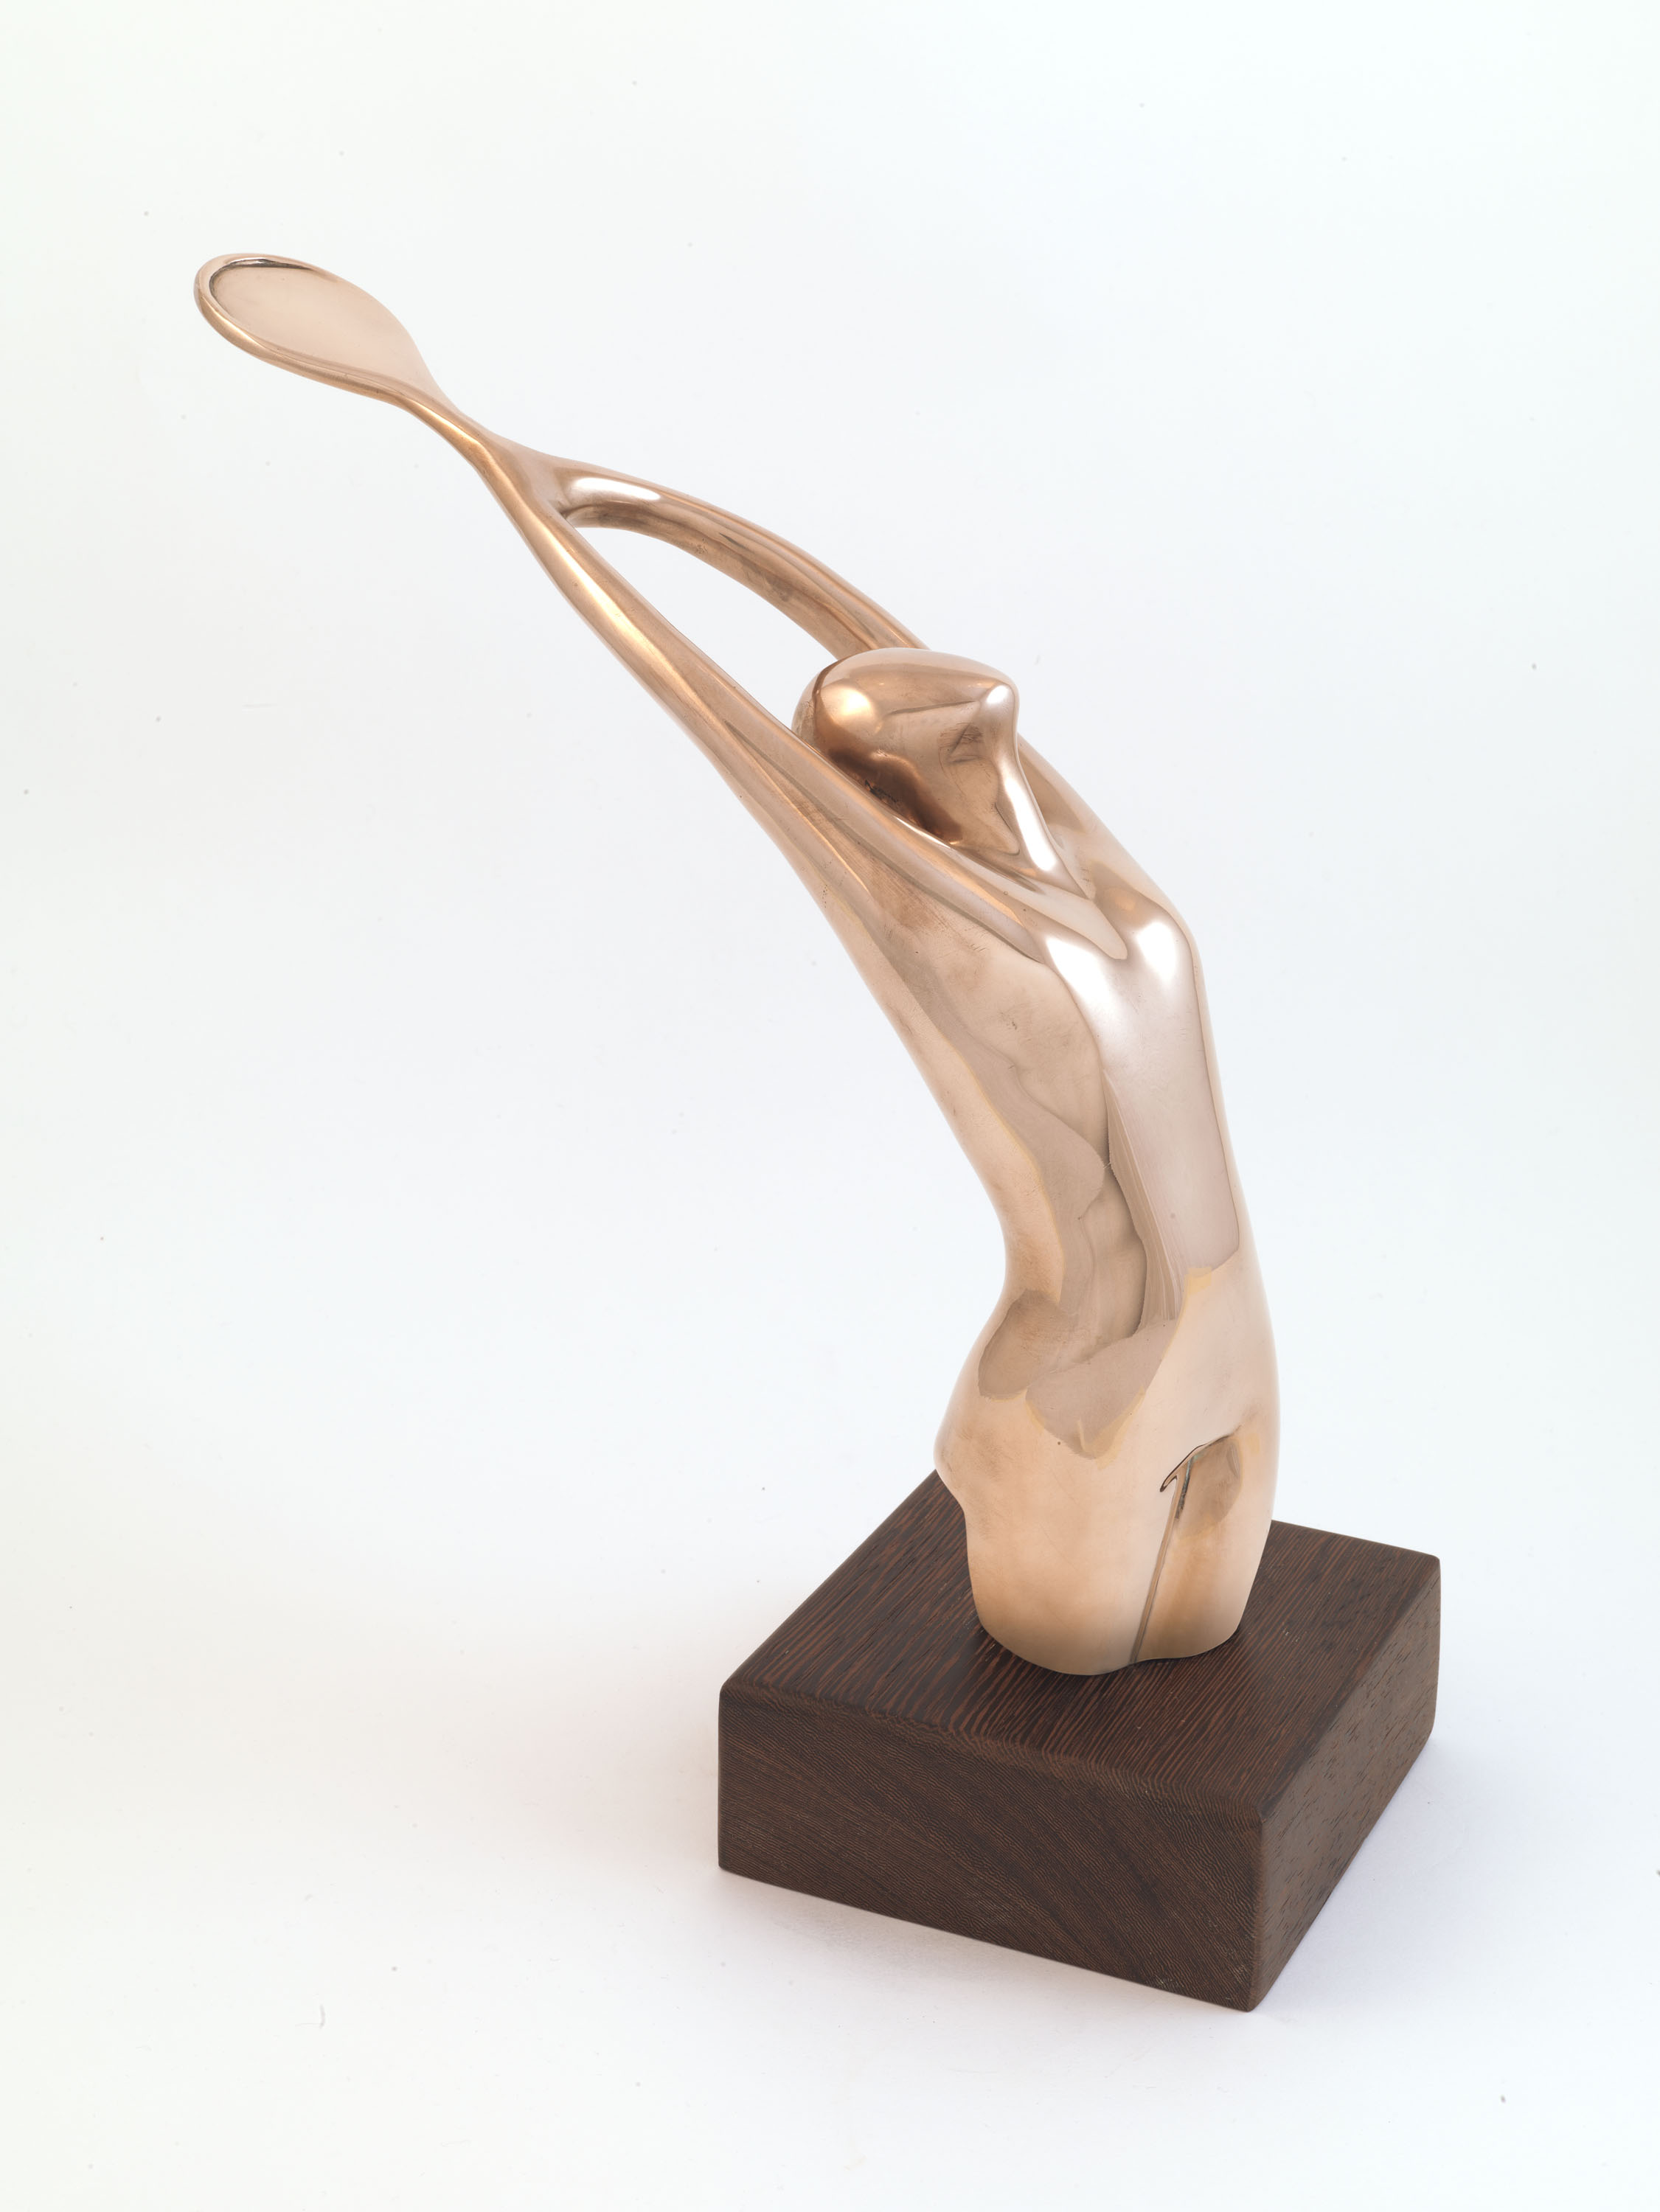 The Slam (Bronze) by Julia Godsiff